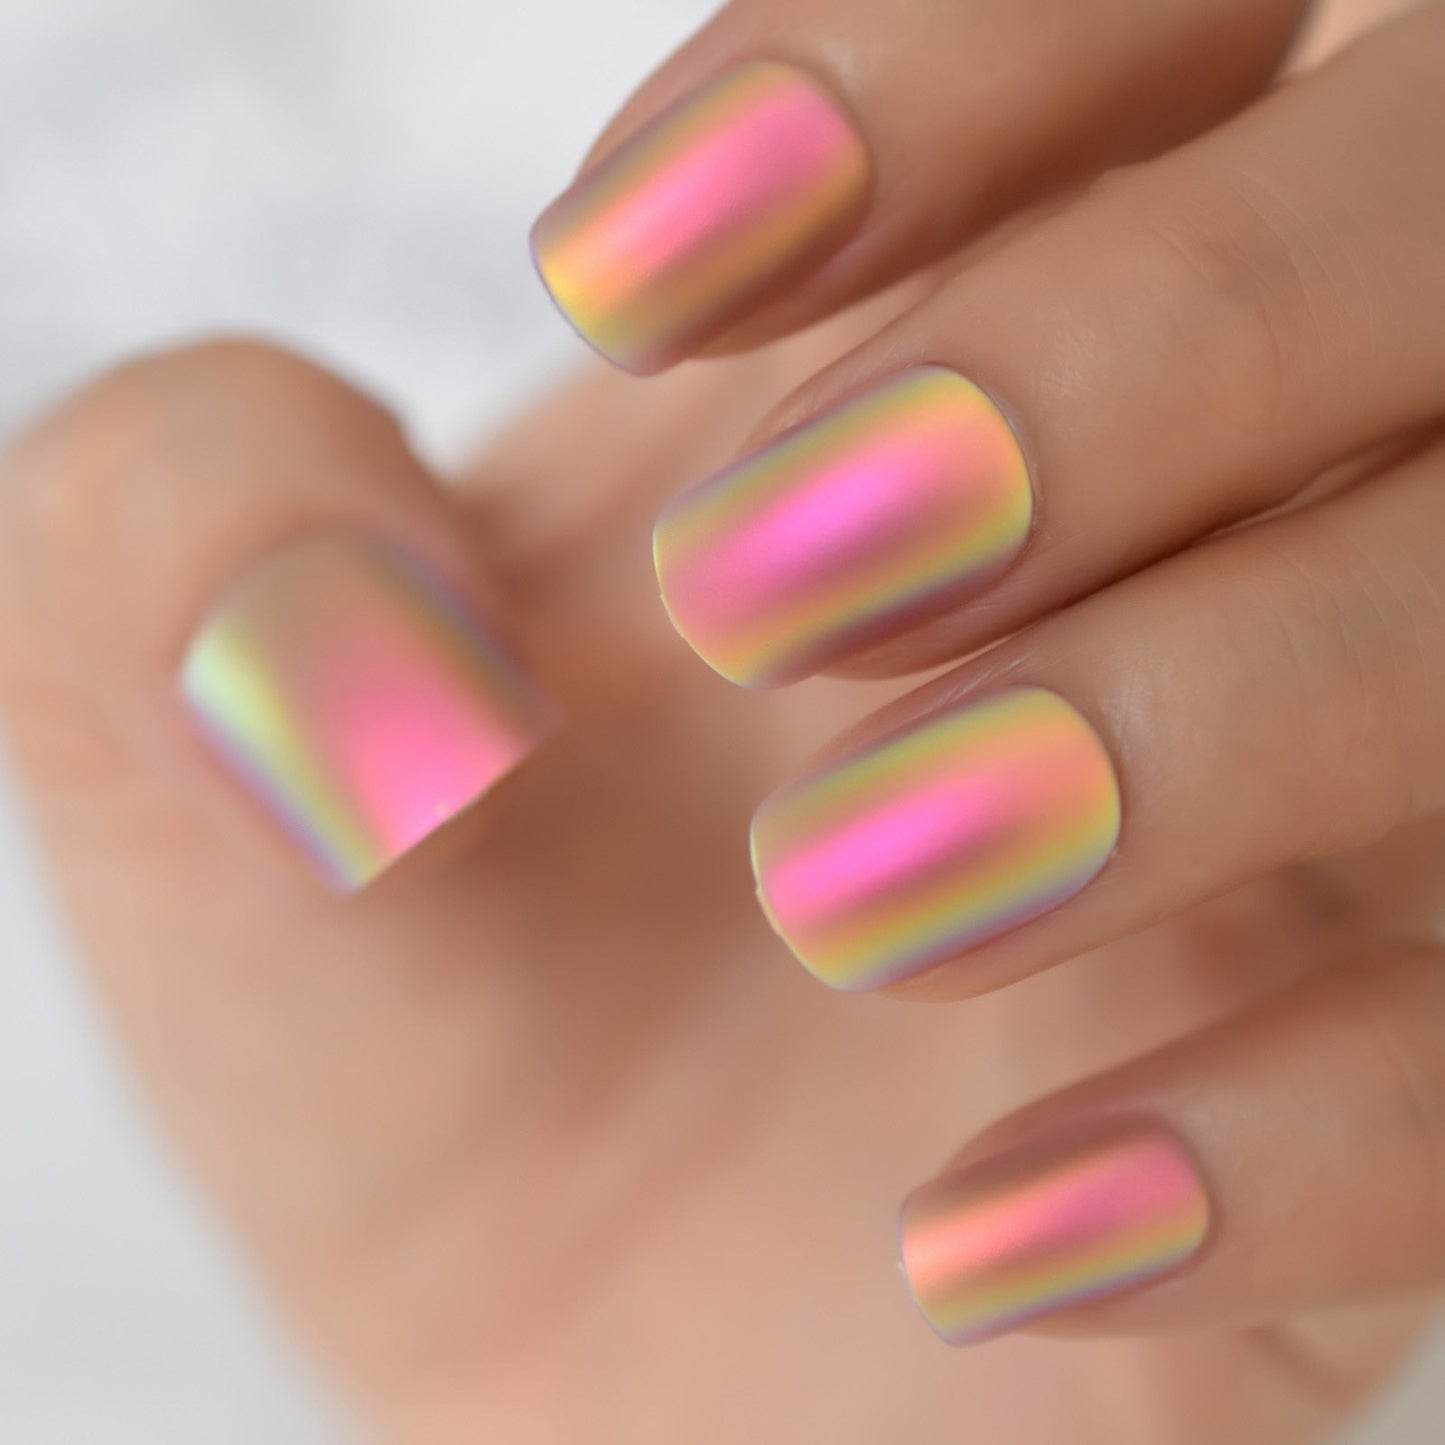 Short Matte Metallic Press On Nails Holographic Multi Color Shiny Squavol False Nails Fake Nails Art Fingernails Manicure Tips